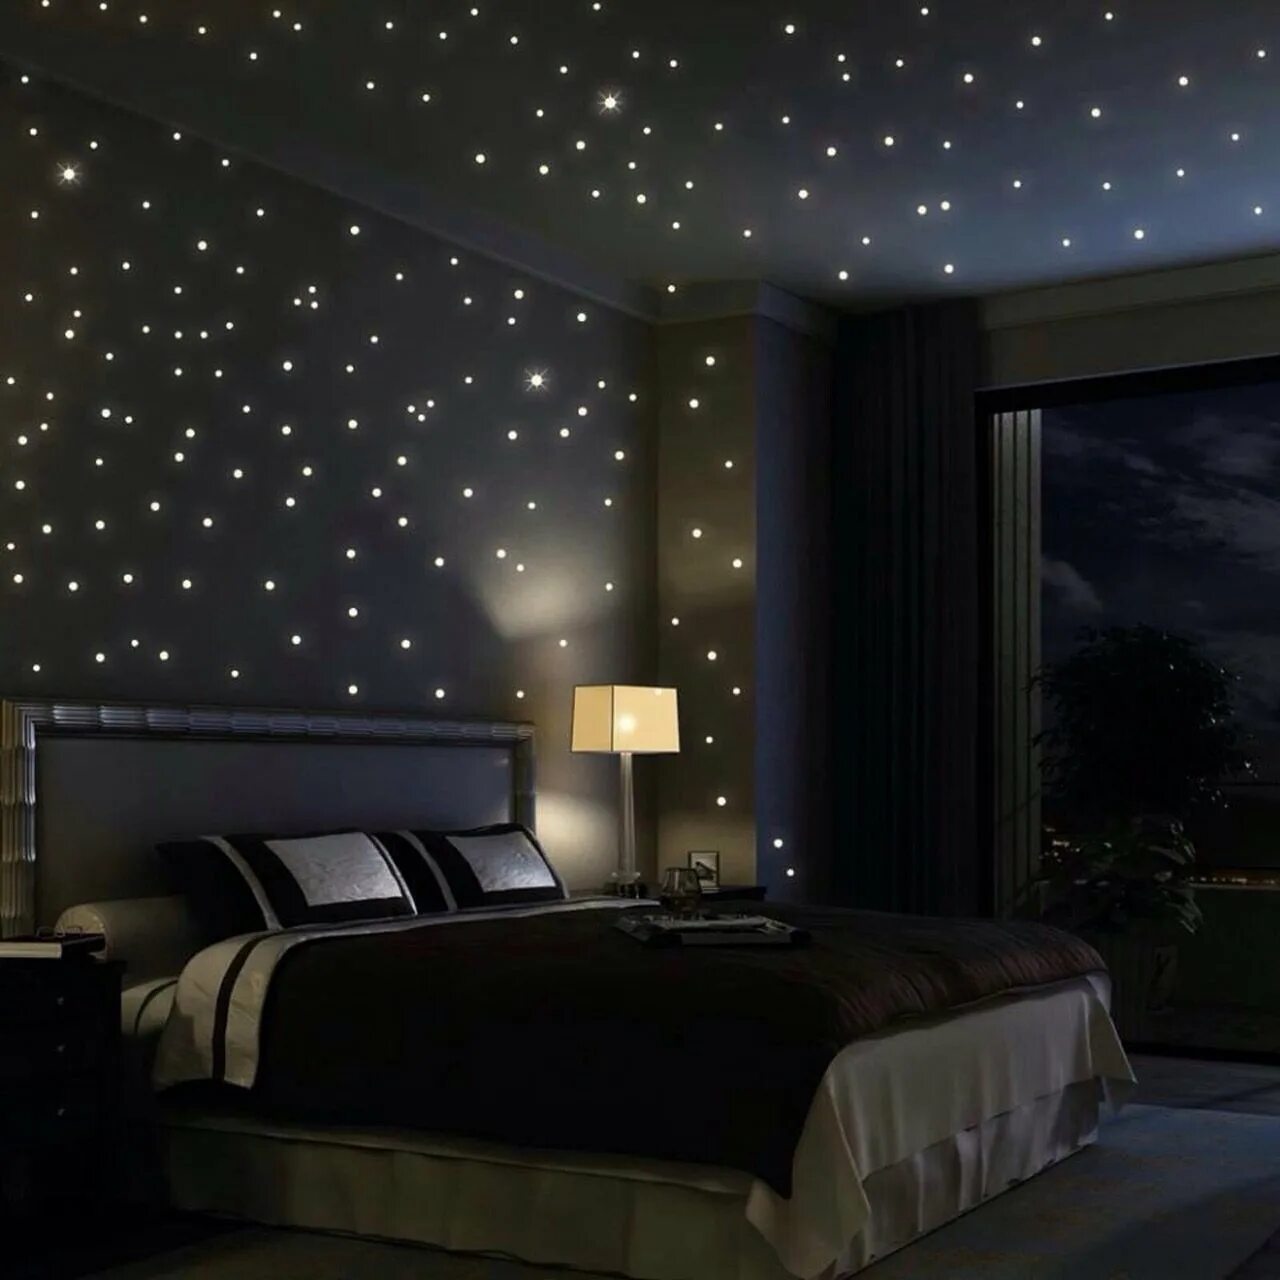 Потолок звездное небо. Потолок звездное небо в спальне. Звездное небо в комнате. Звездный потолок в спальне. Звездное небо домой